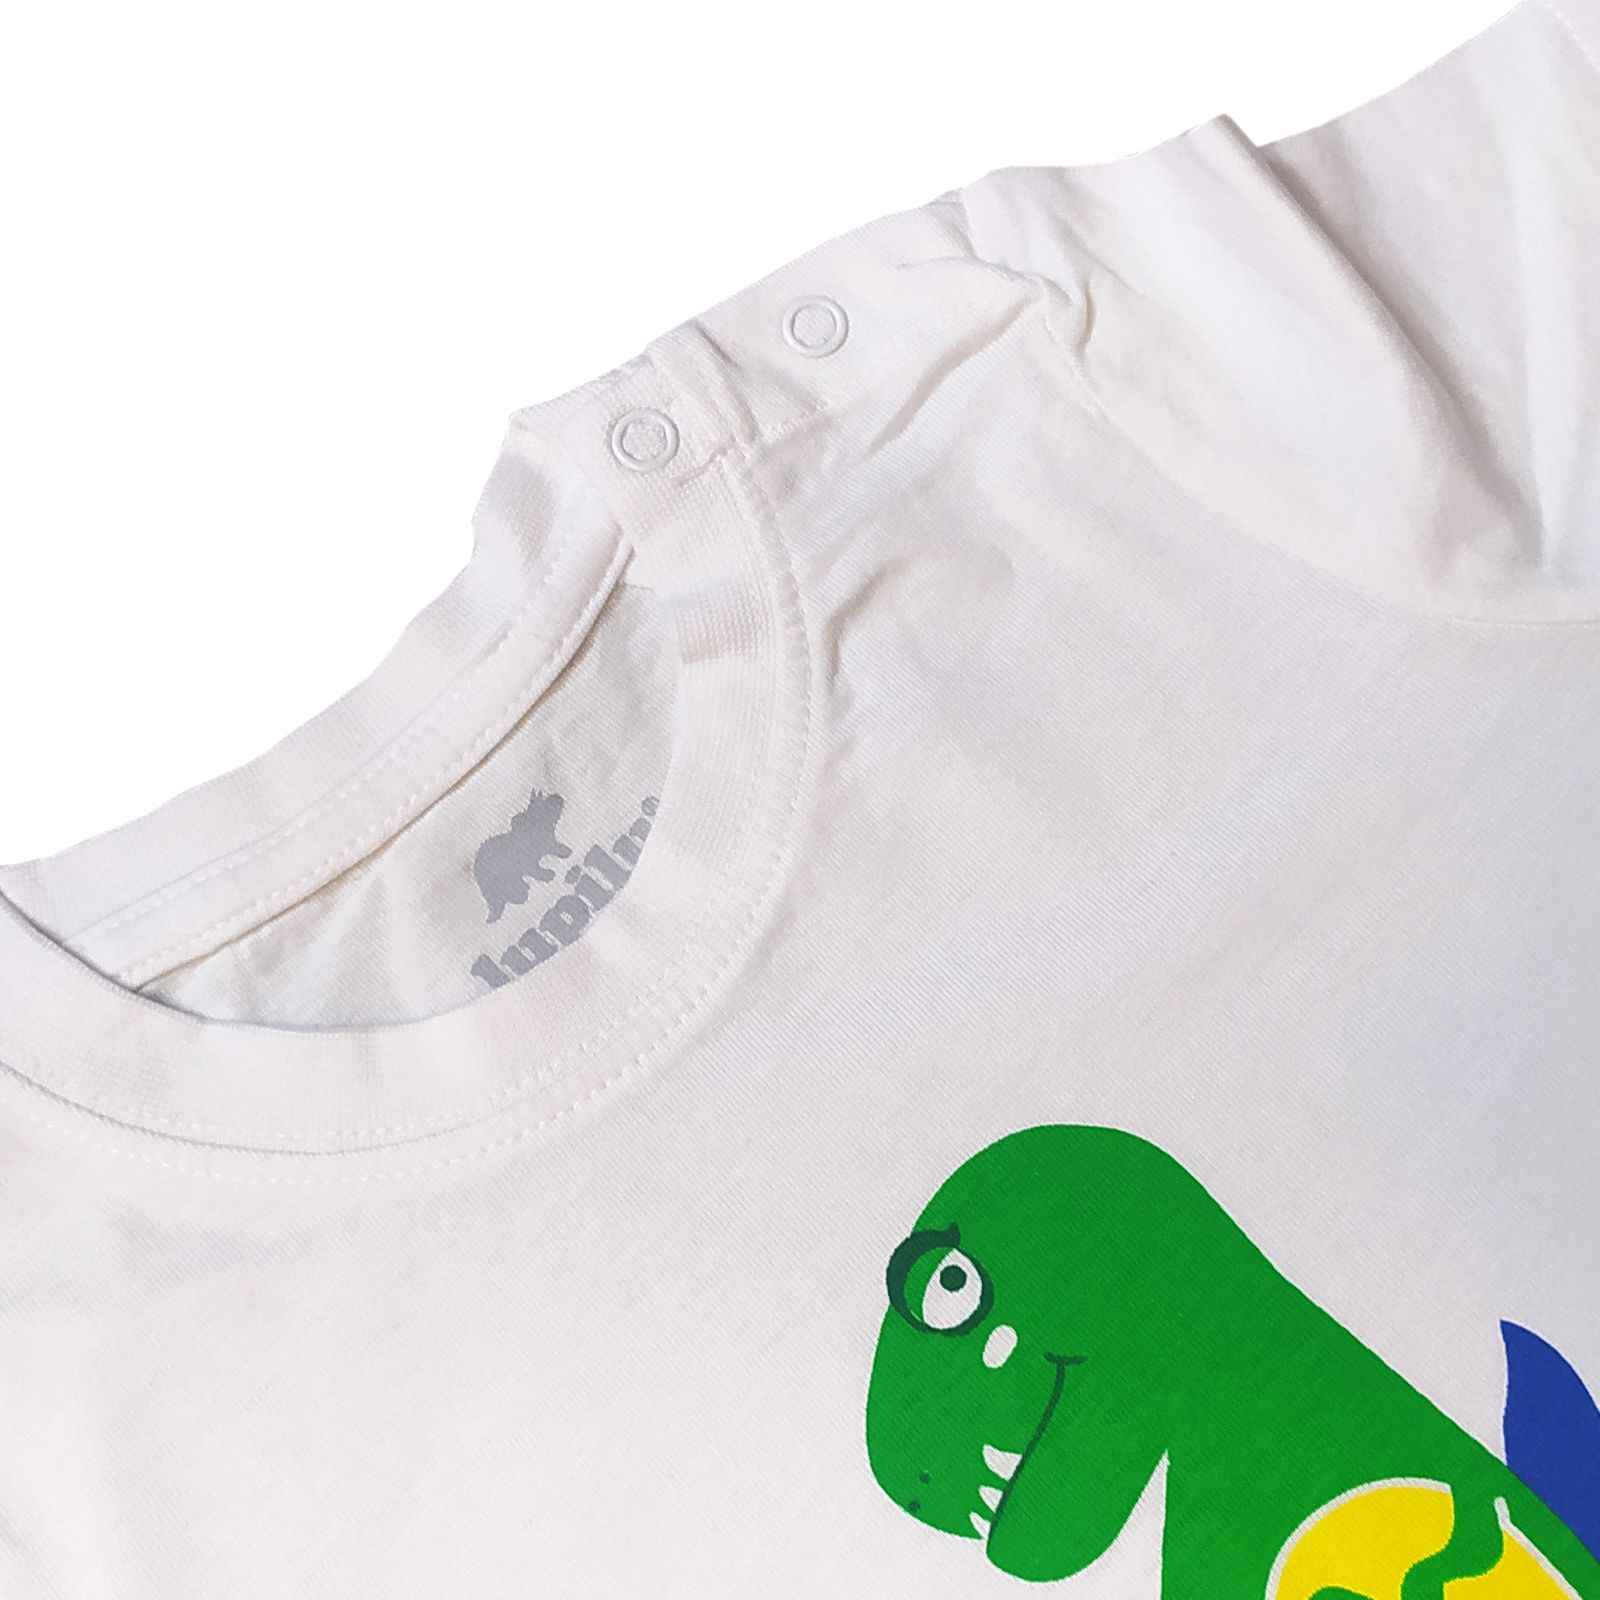 تی شرت بچگانه لوپیلو طرح دایناسور کد B12 -  - 3